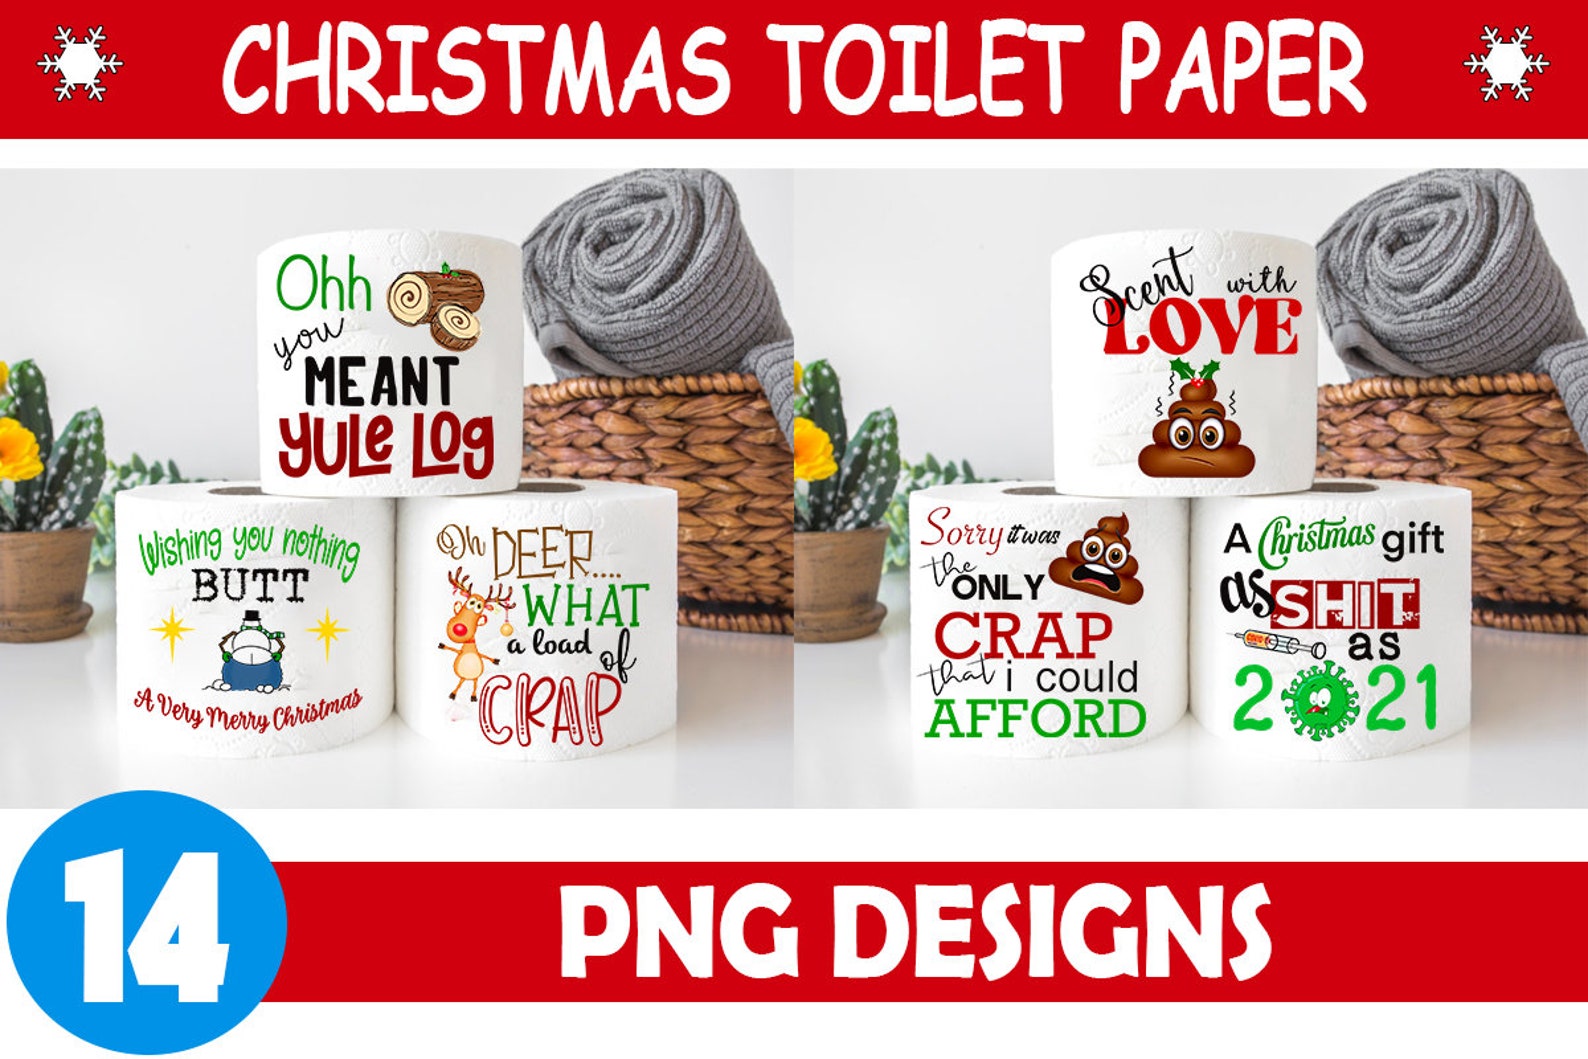 Christmas toilet paper designs.